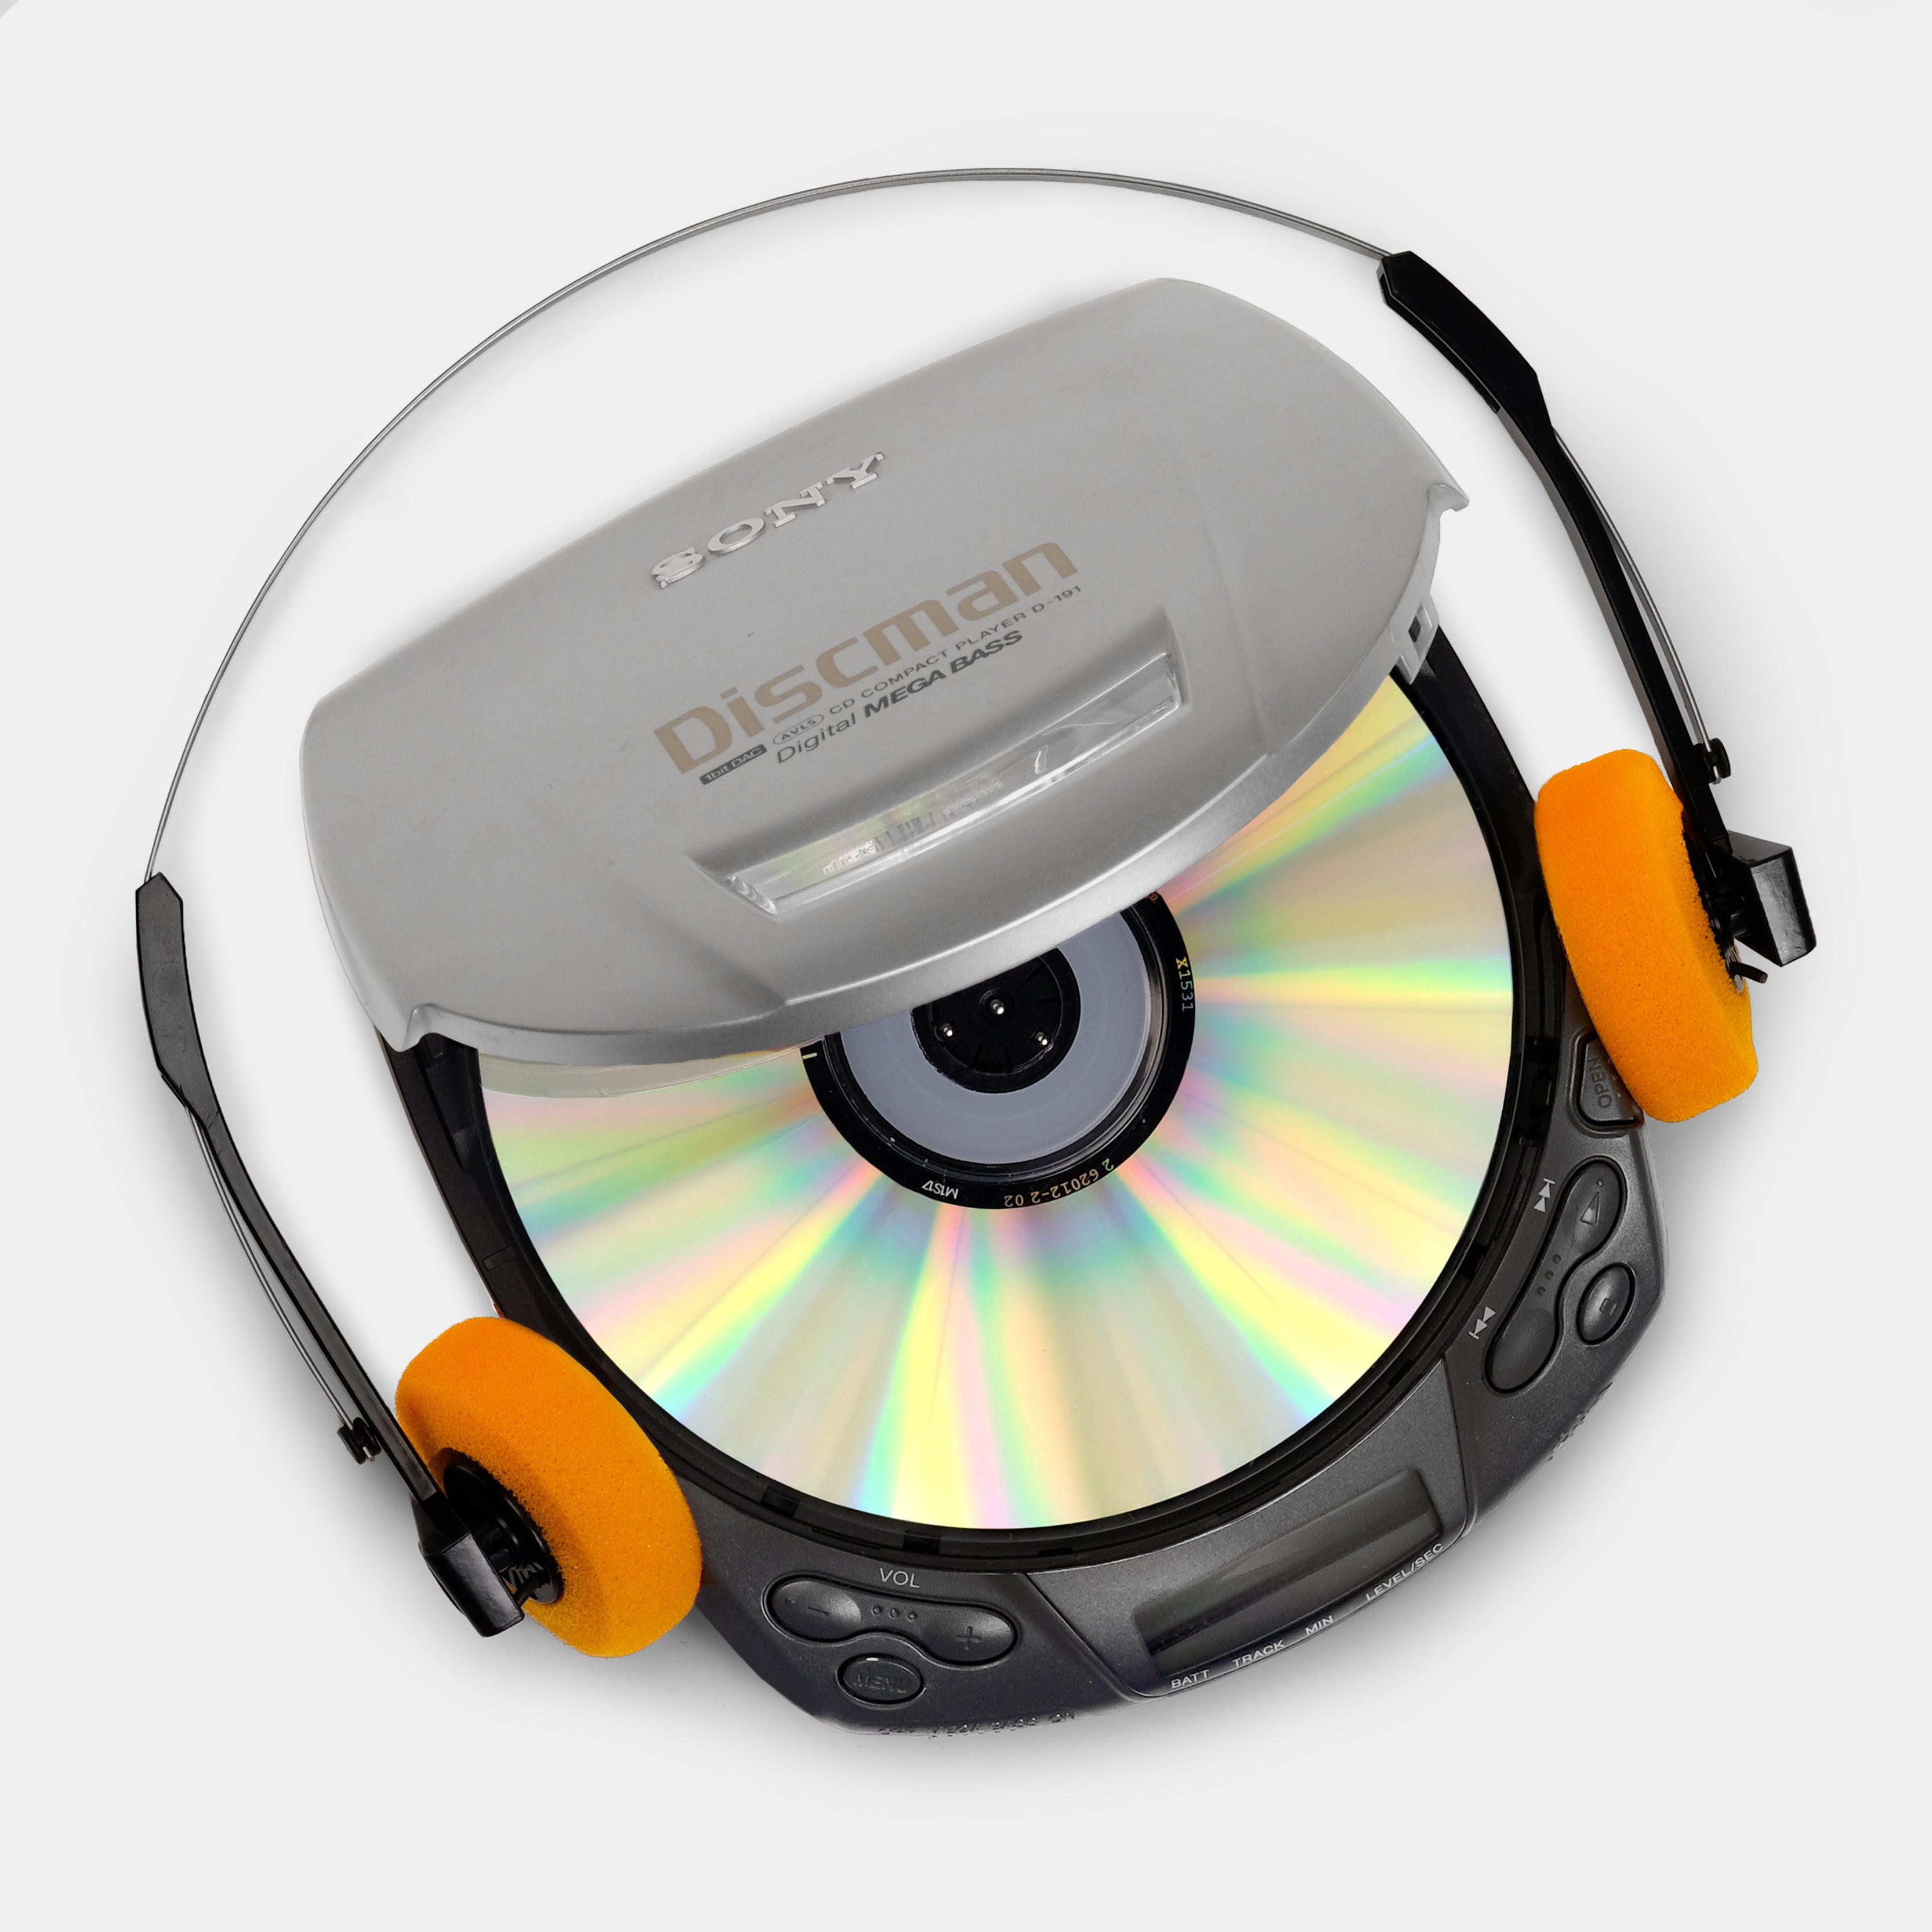 Sony D191 Discman - CD Walkman - Portable CD Player - Blue - VGC (D-191/LC)